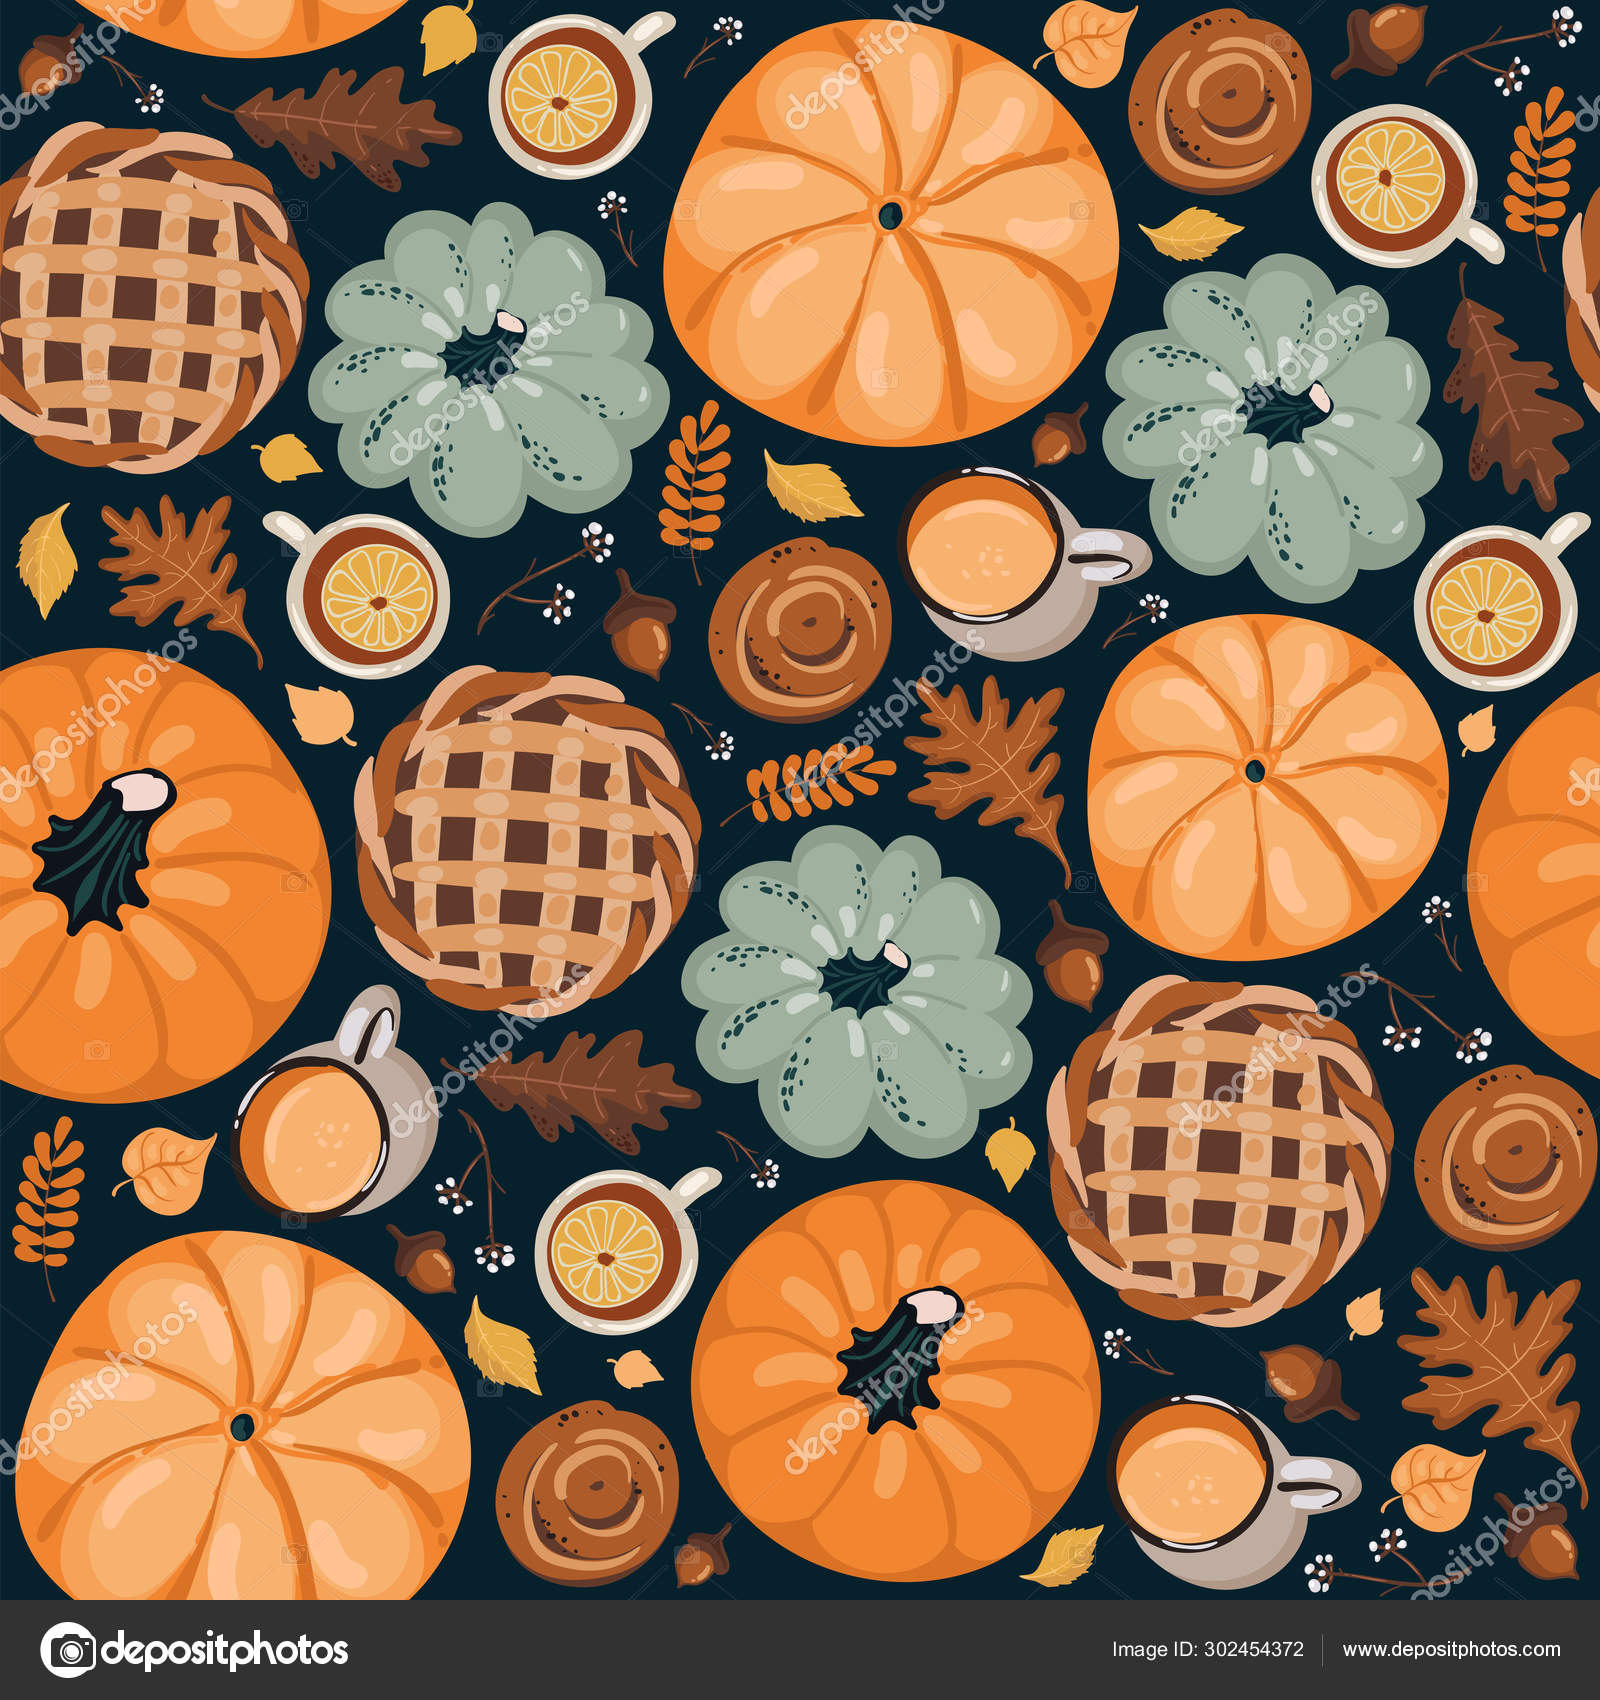 Cute seamless autumn pattern background